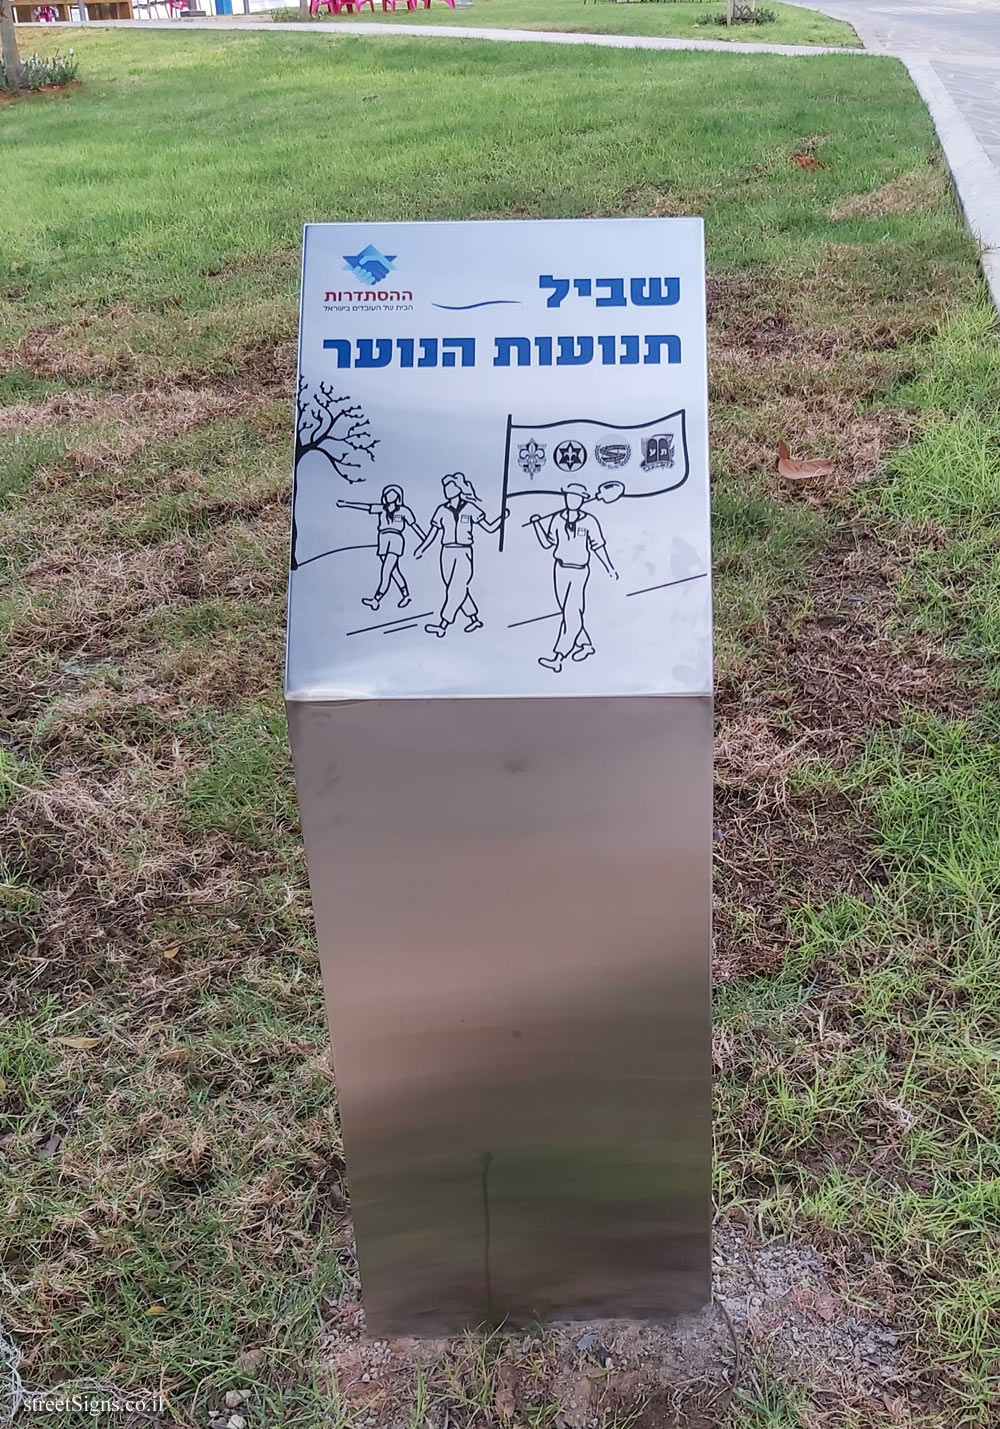 Tel Aviv - Histadrut Garden - Youth Movement Trail - Arlozorov St 93, Tel Aviv-Yafo, Israel